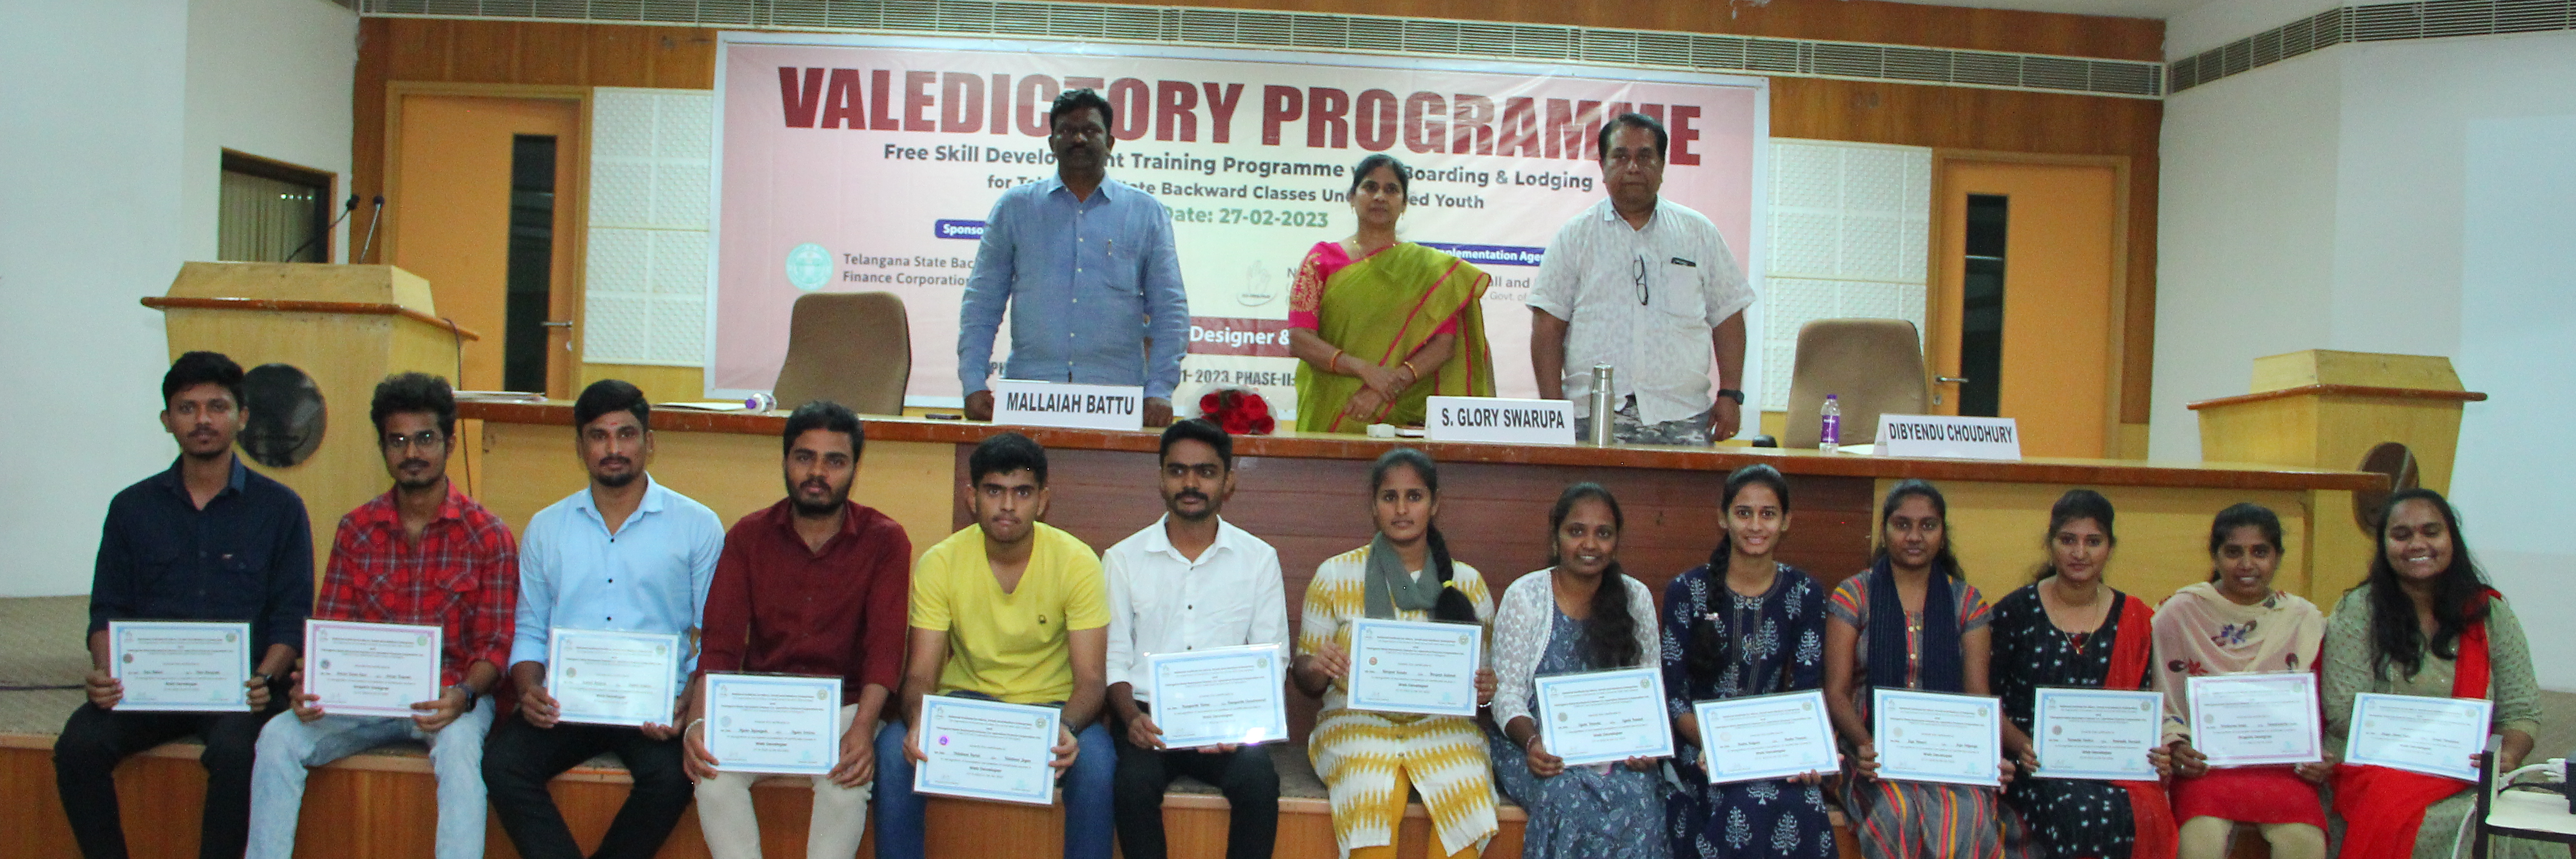 Valedictory for Free Skill Development Training Programme 